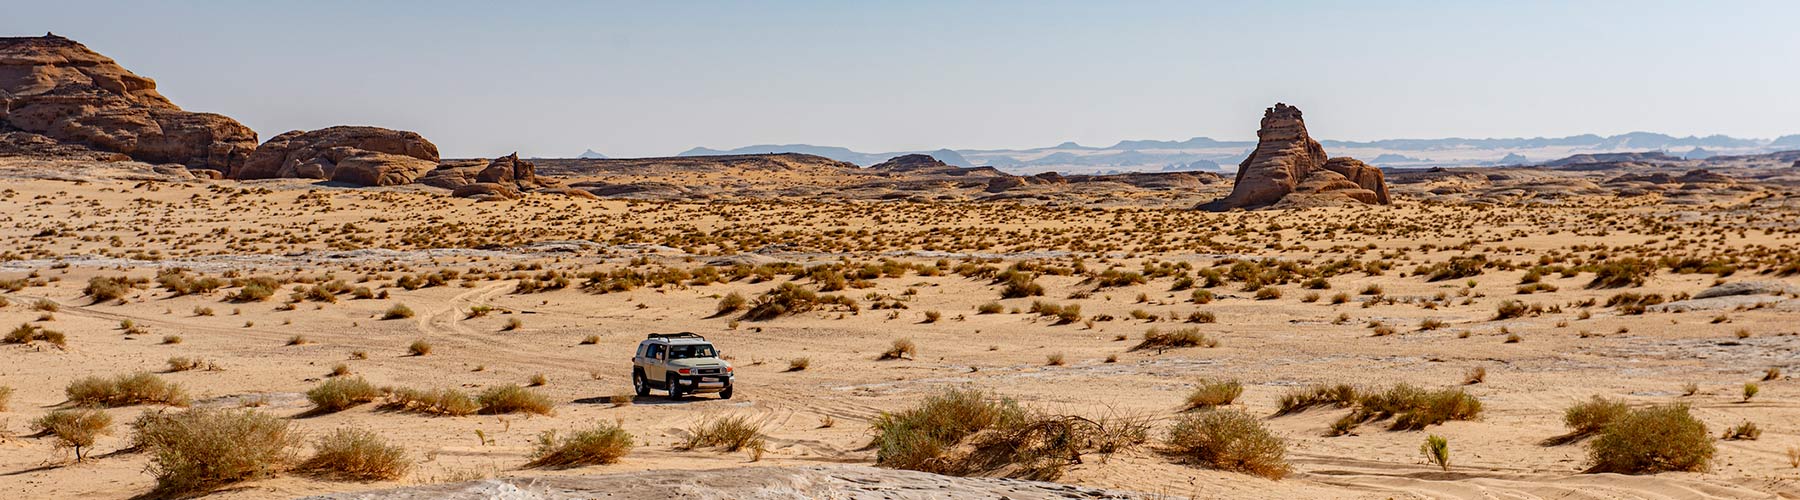 Vehicle driving through a desert